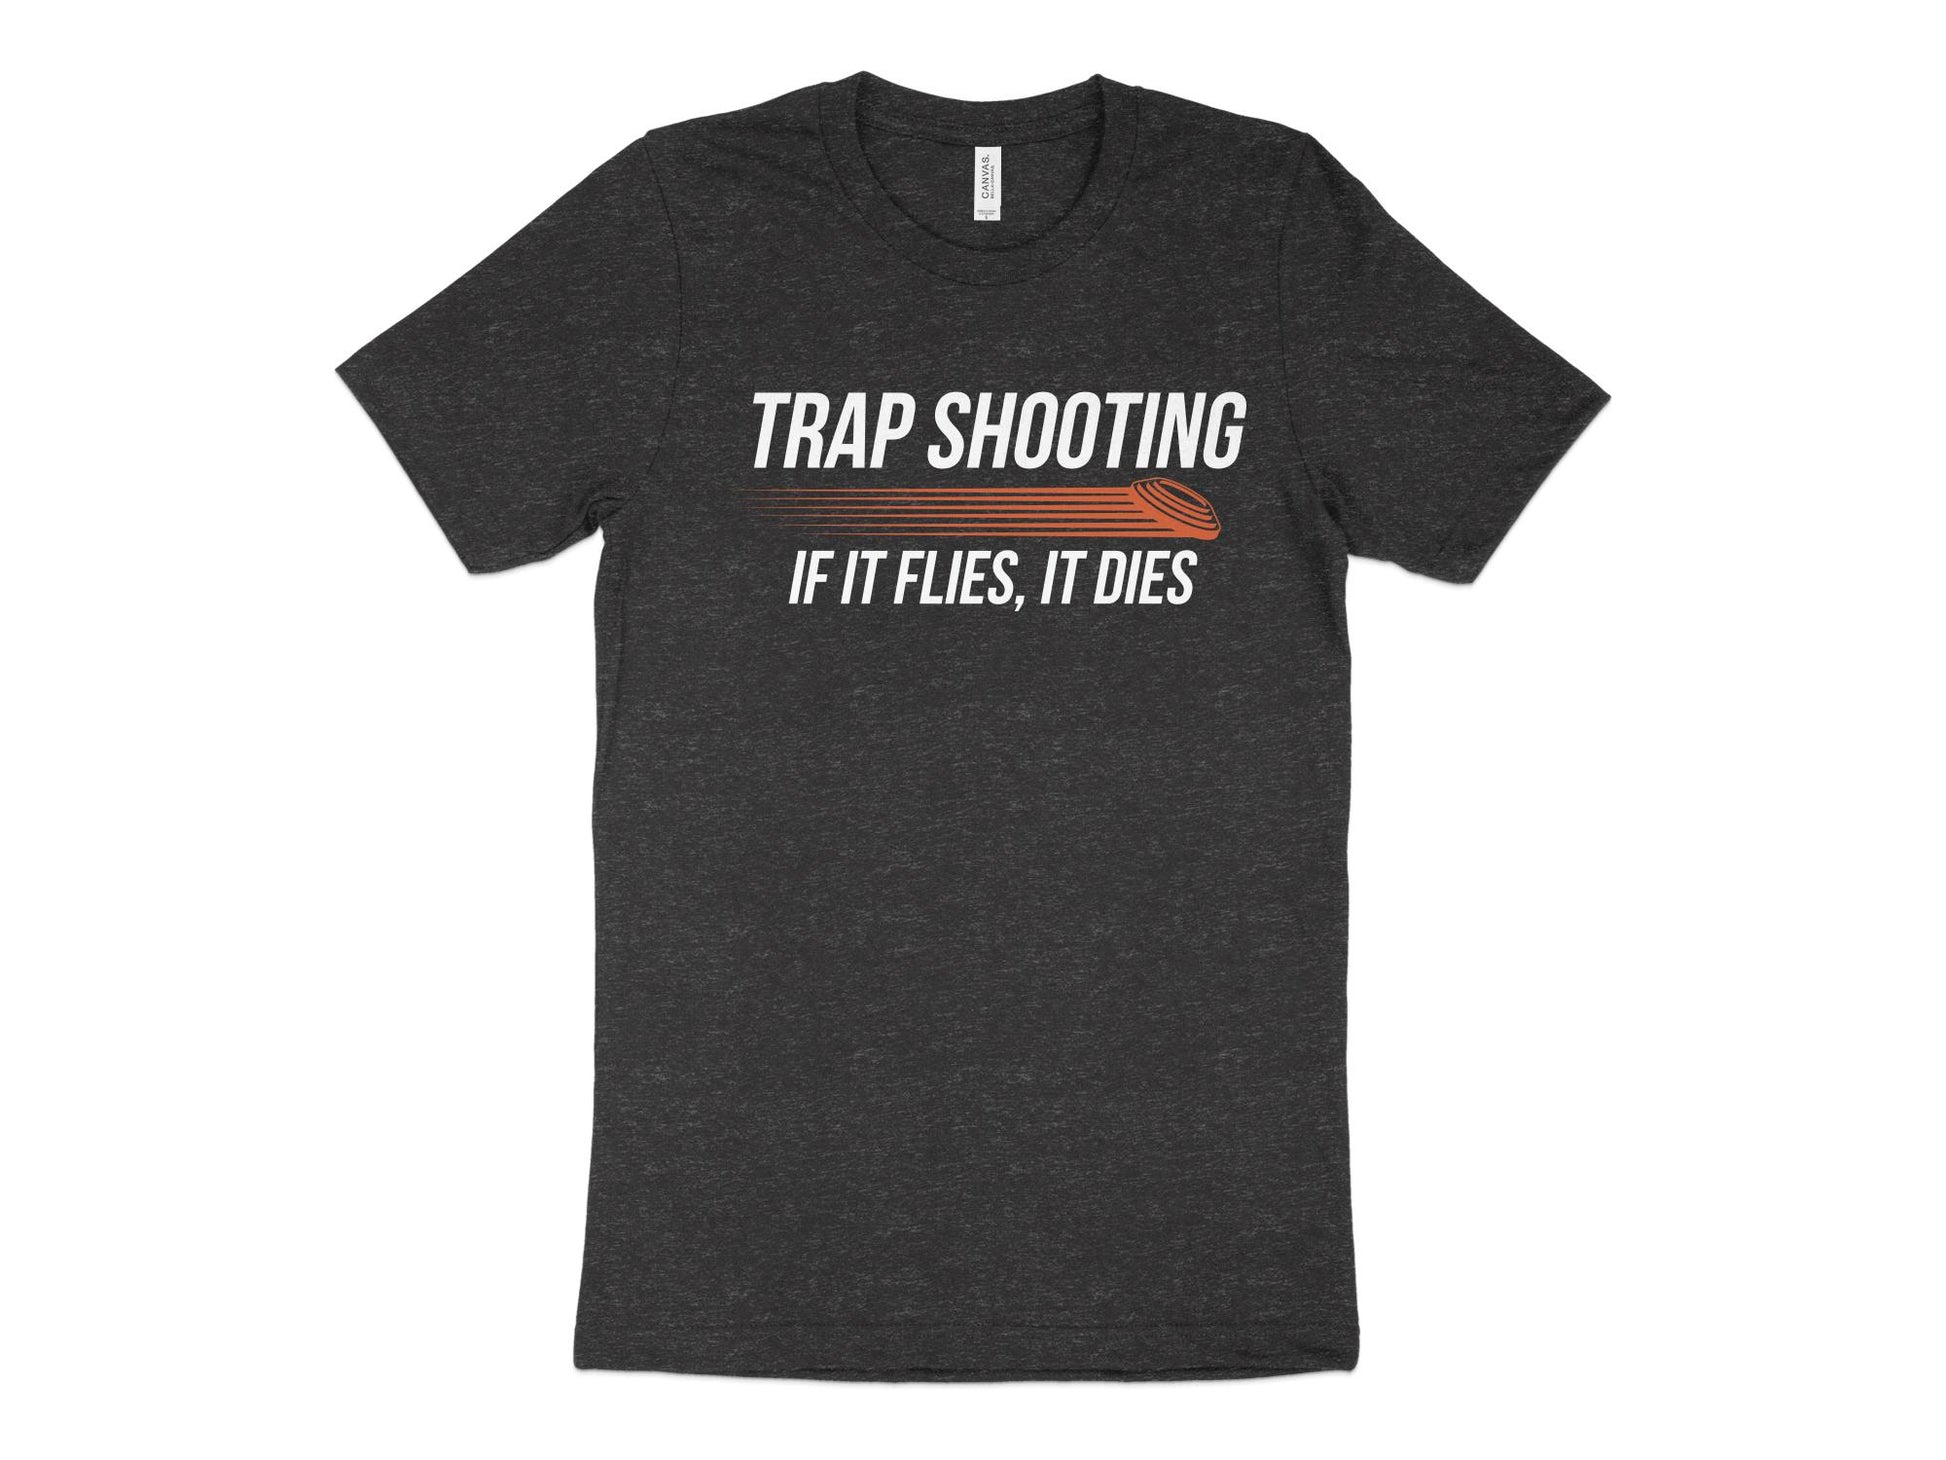 Trap Shooting Shirt, If It Flies It Dies, charcoal